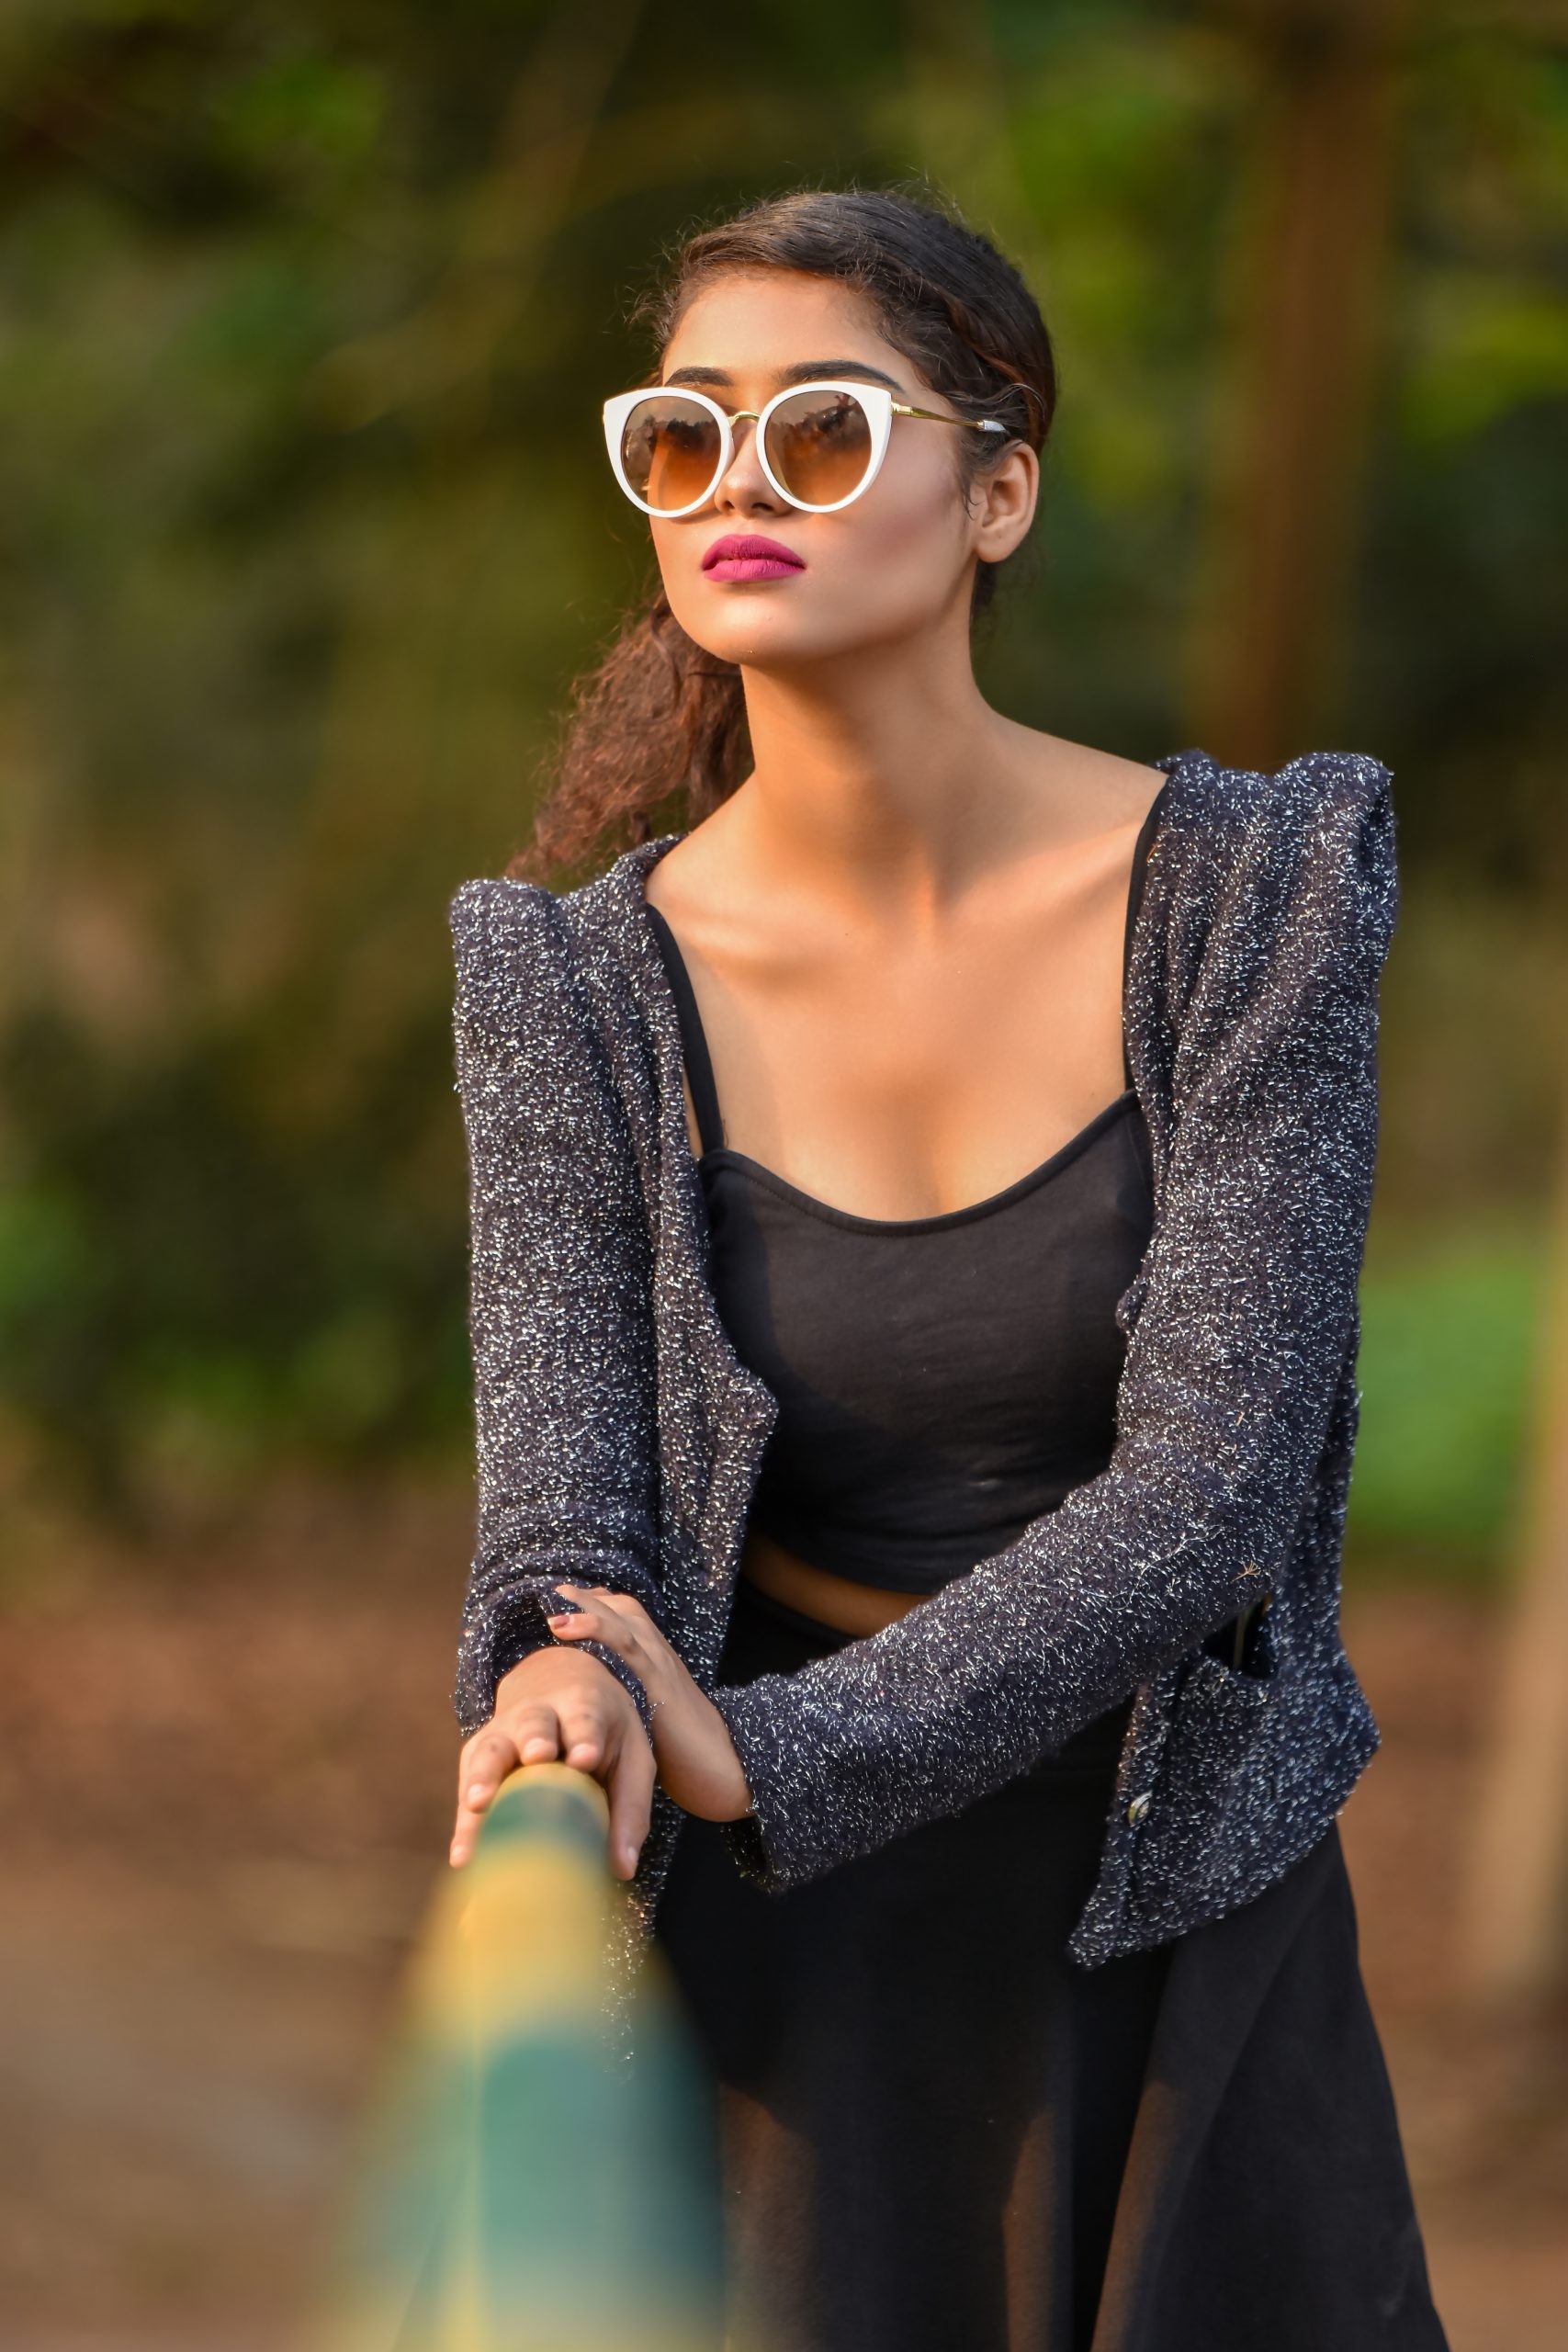 Female model posing with sunglasses